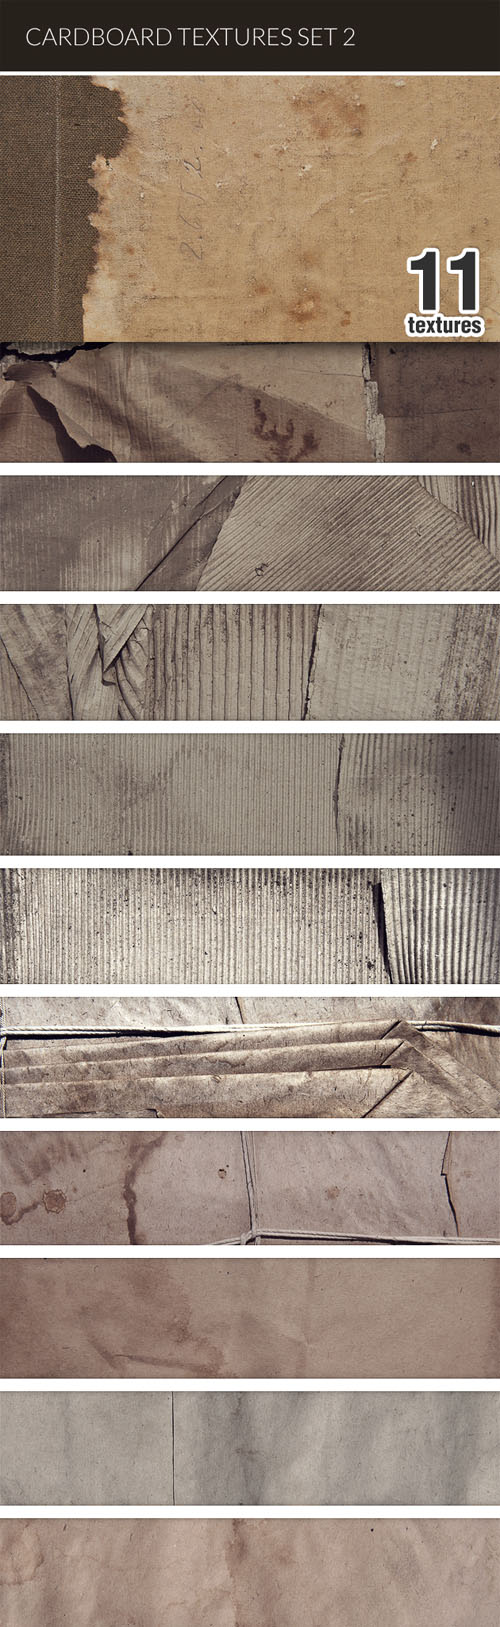 Designtnt - Cardboard Textures Set 2